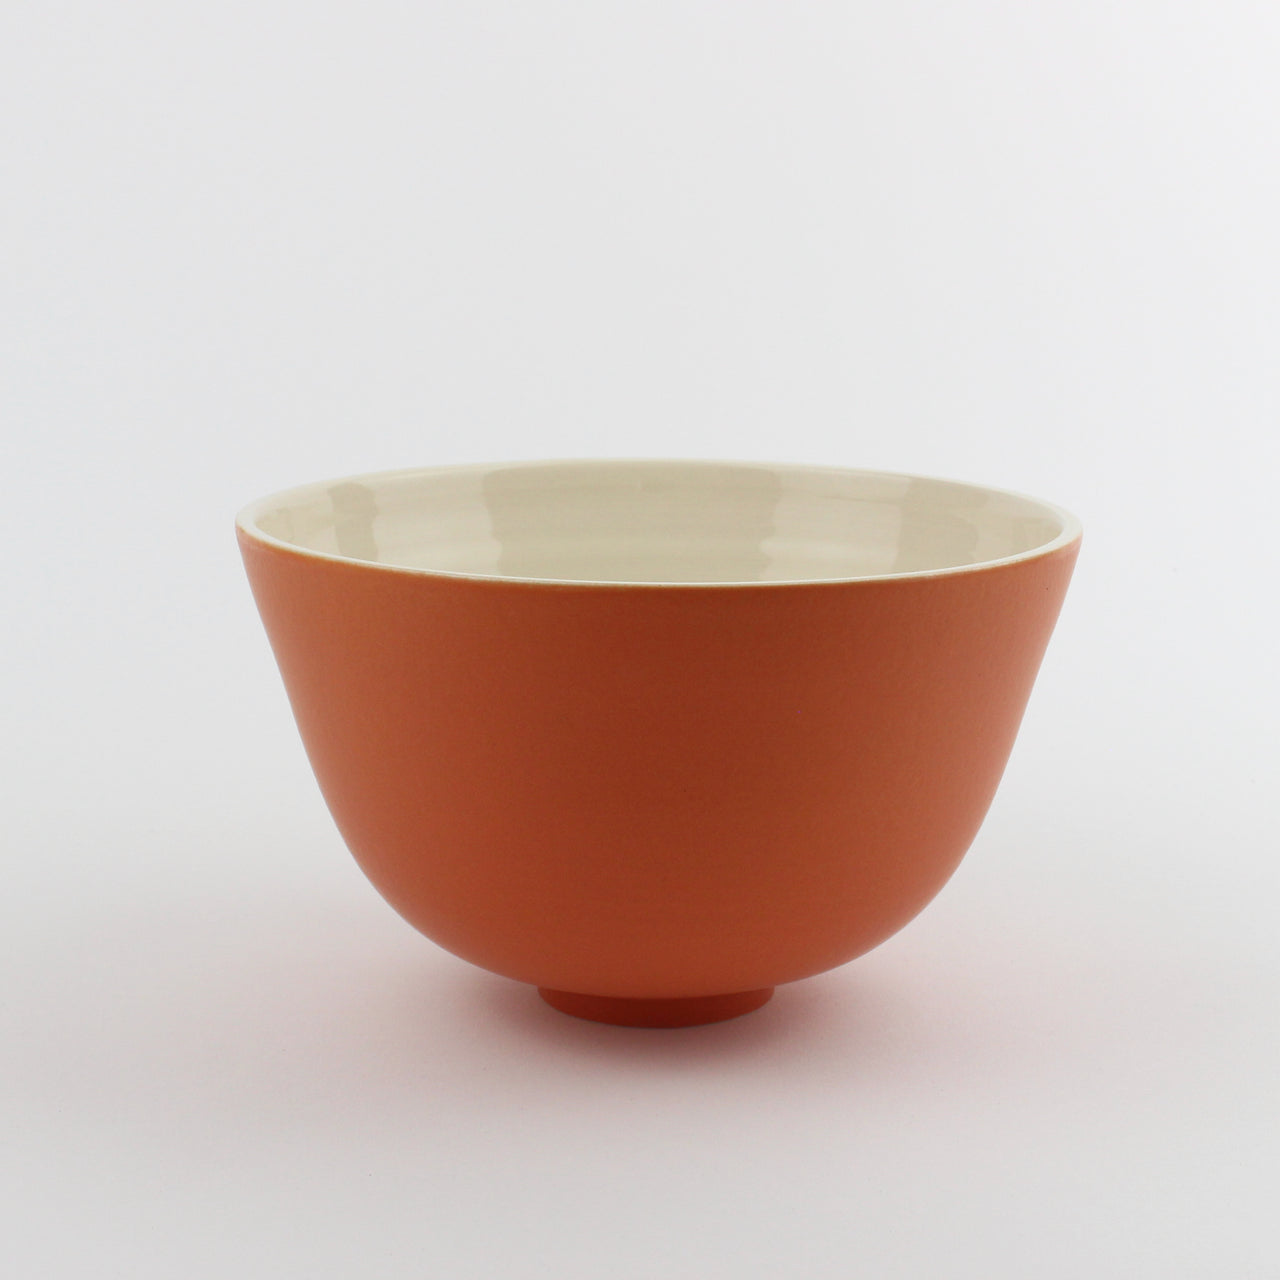 Lucy Burley - Orange bowl